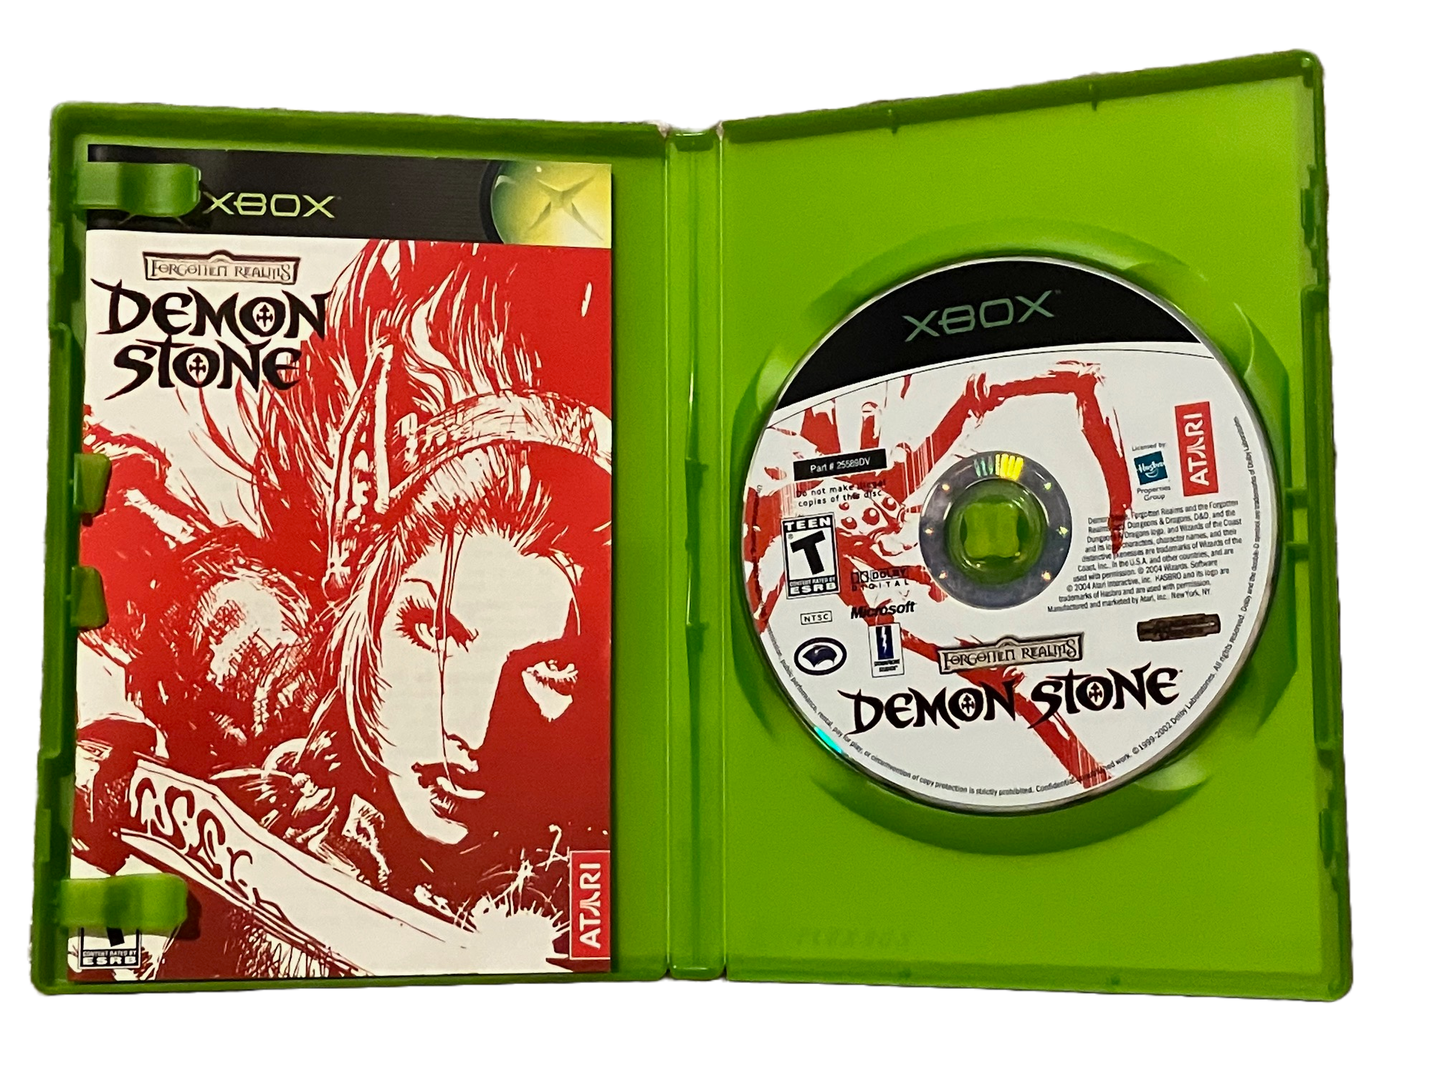 Demon Stone Original Xbox Complete